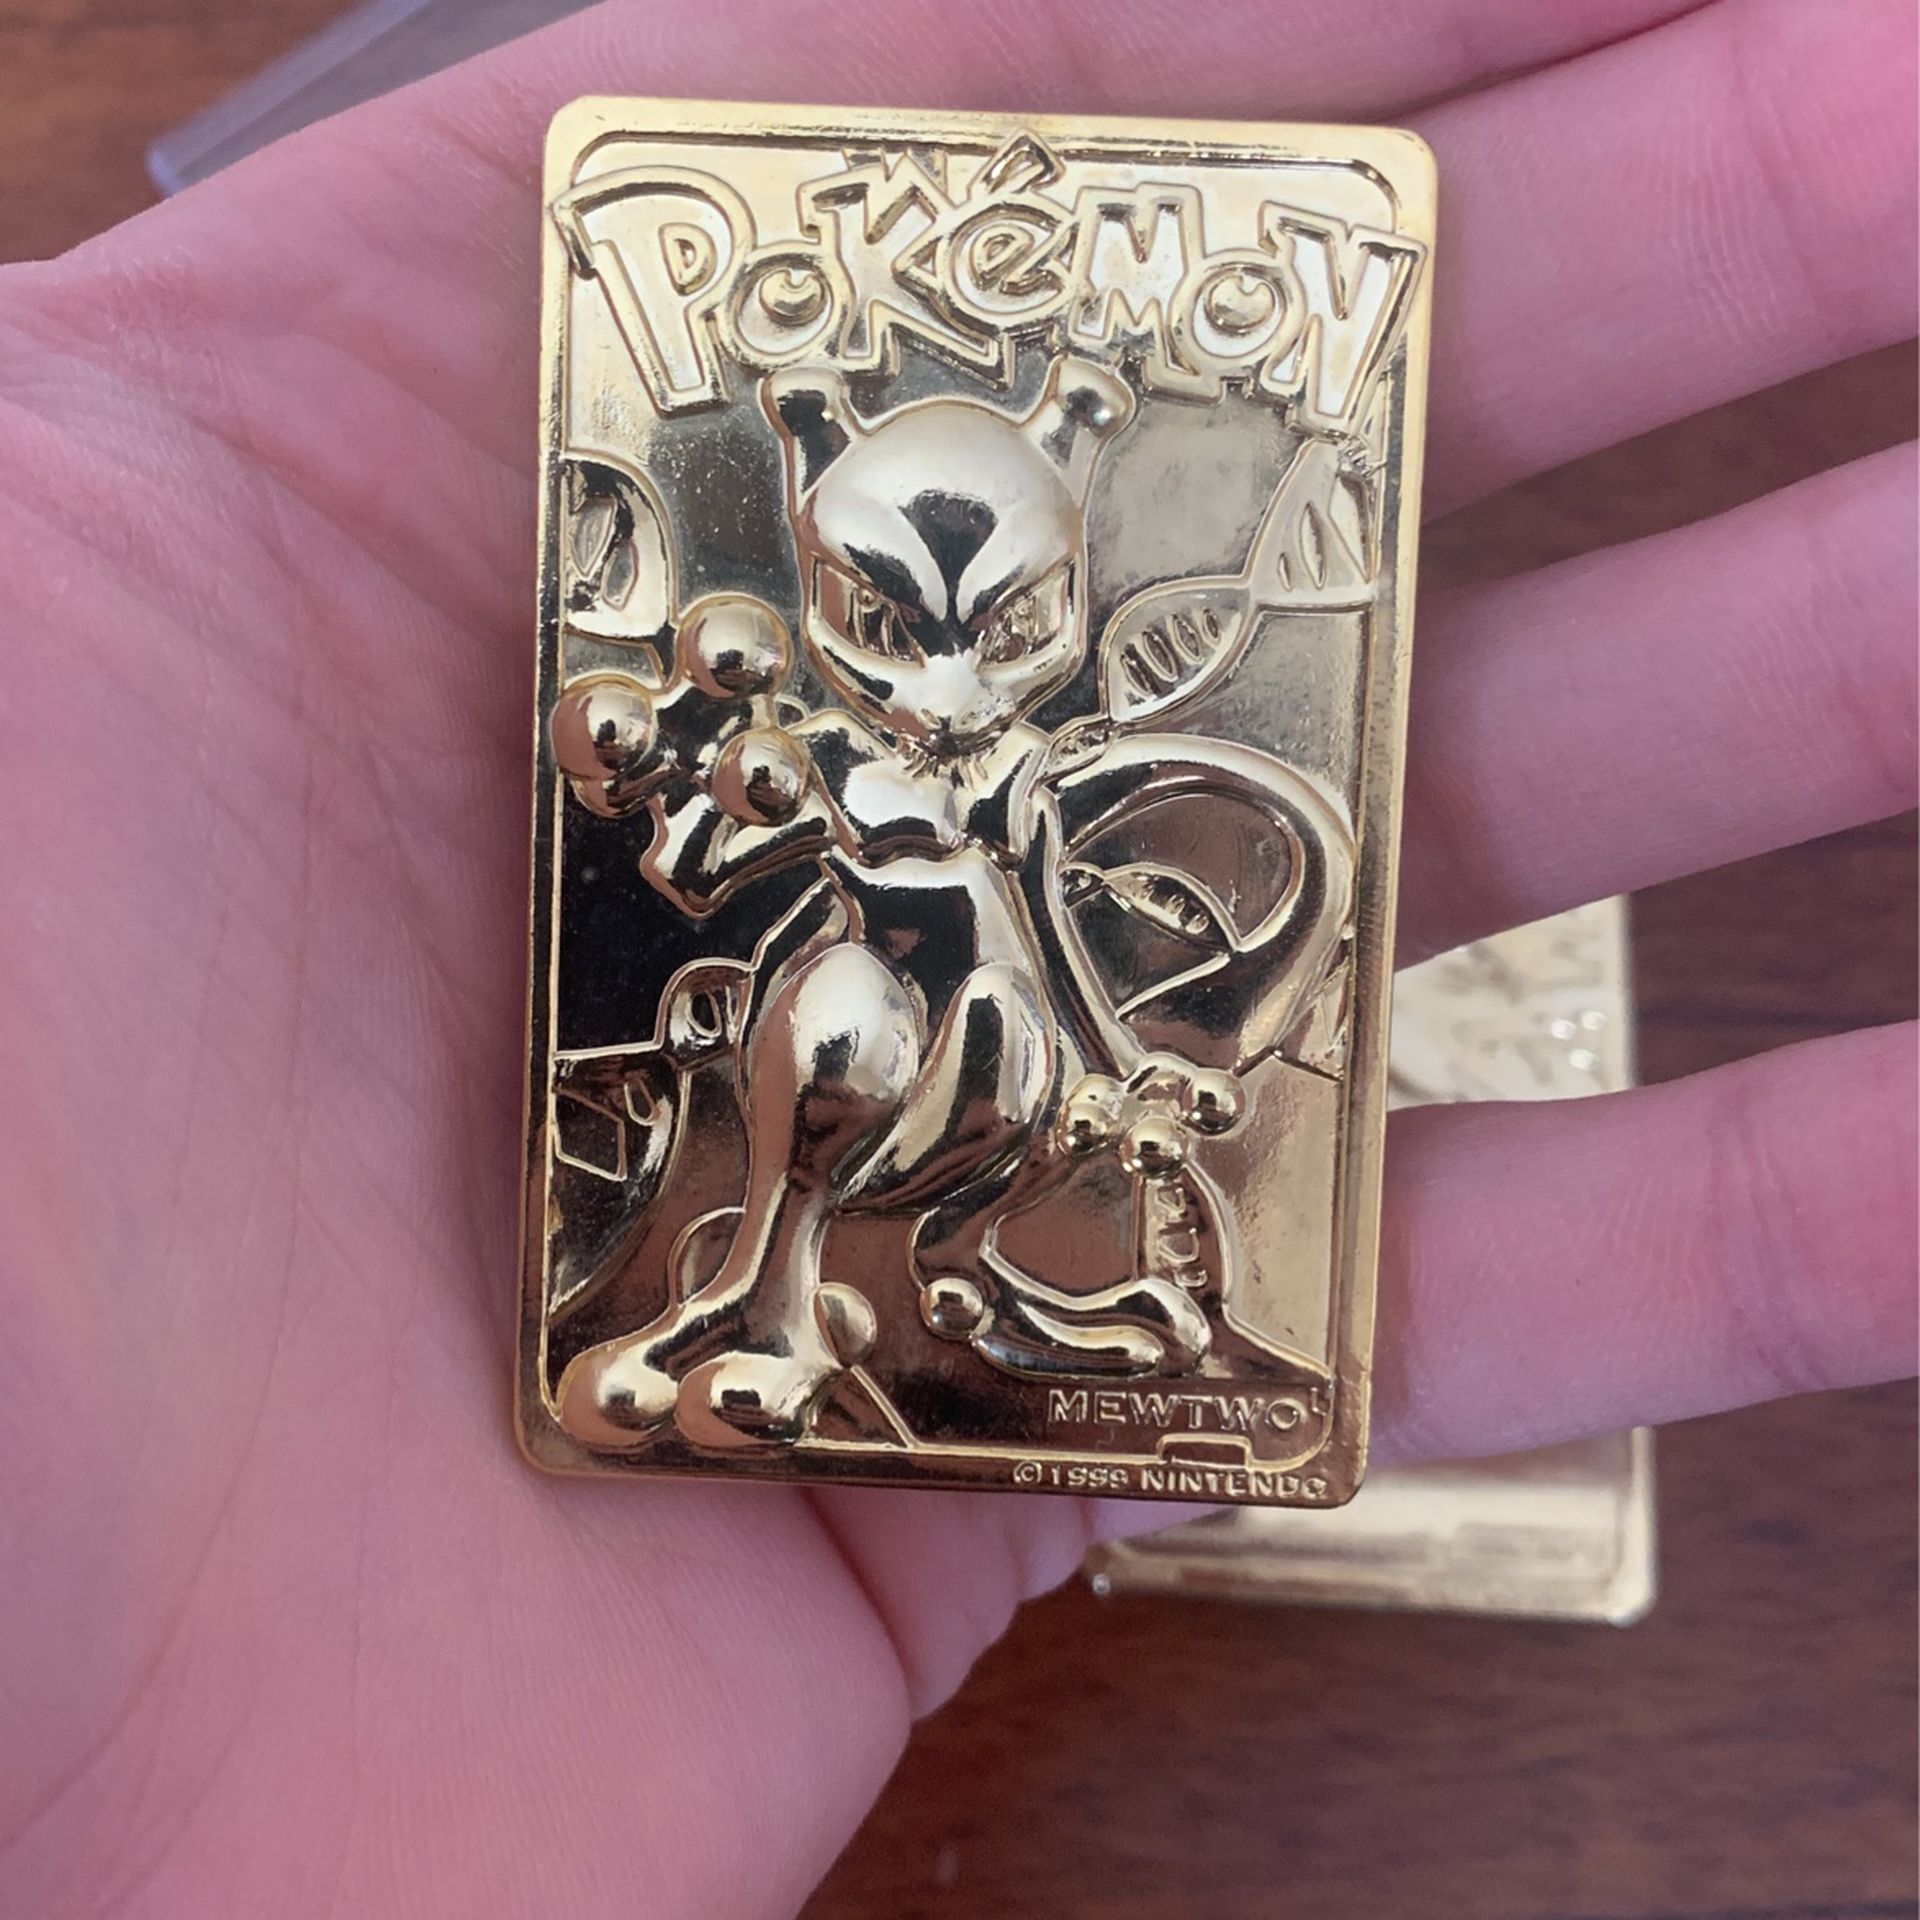 2 Gold Plates Pokémon Cards - Charizard & Mewtwo